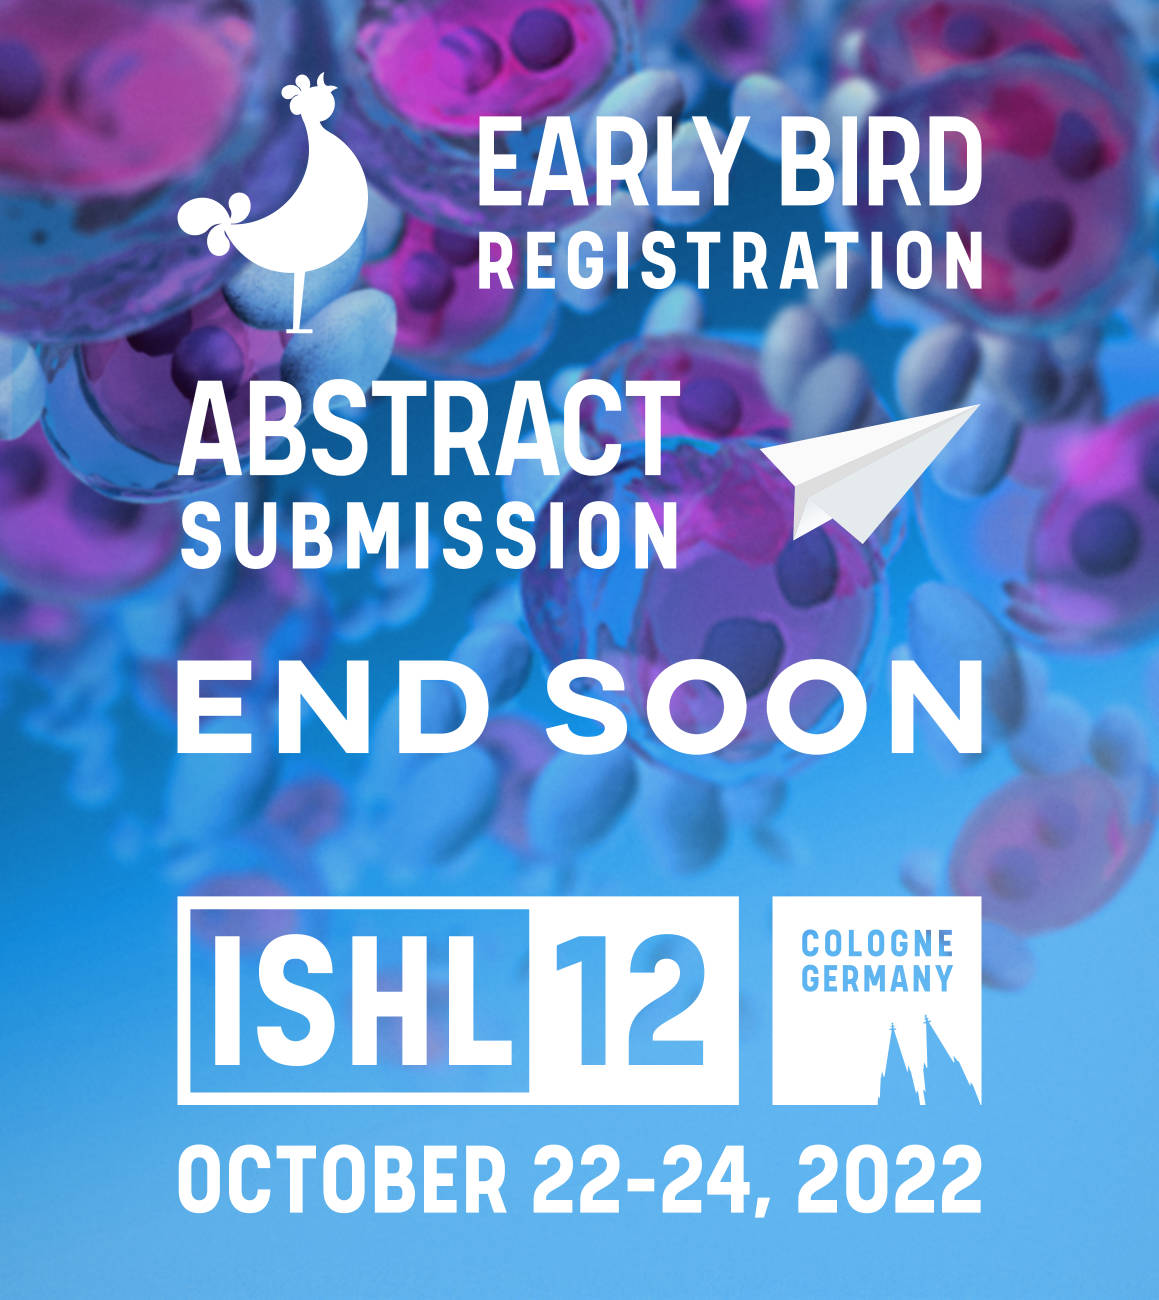 ISHL12 – Early Bird Registration & Abstract Deadline